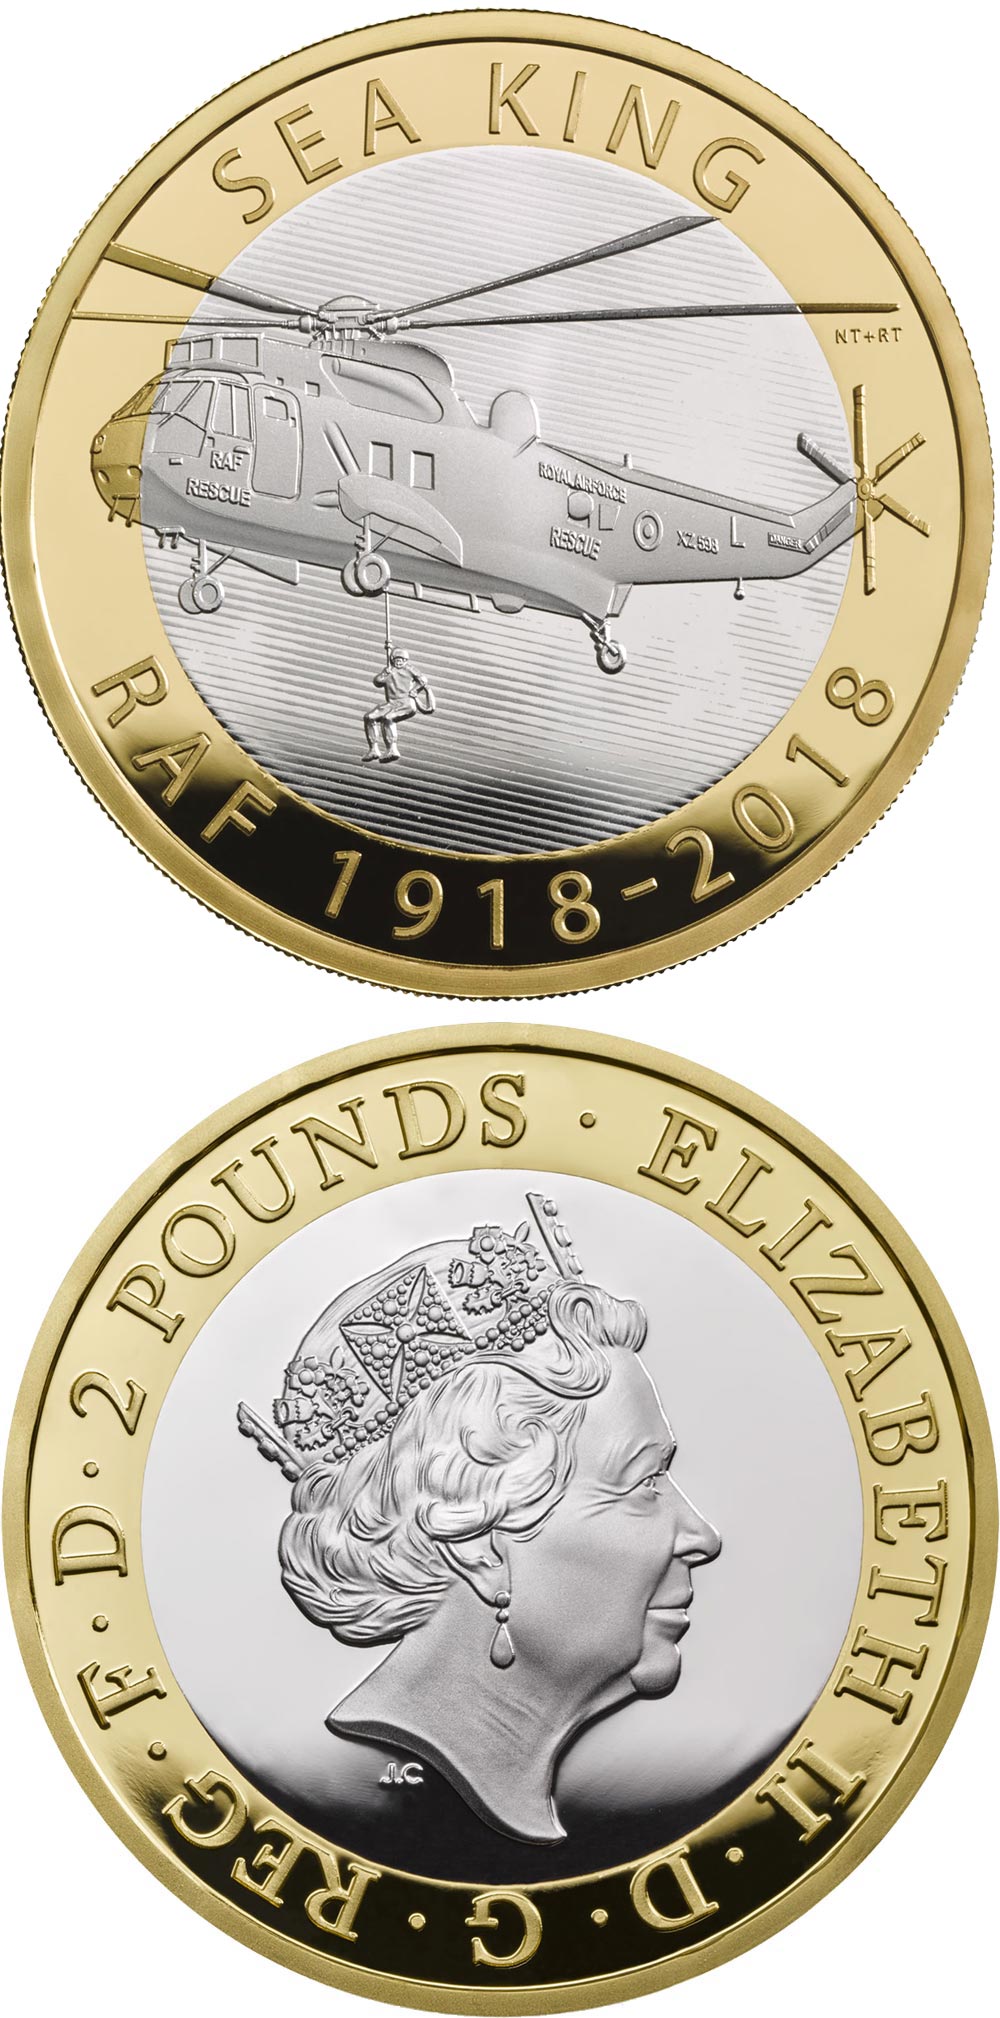 RAF Sea King Queen Elizabeth II £2 Coin - Mintage: Not entered general circulation